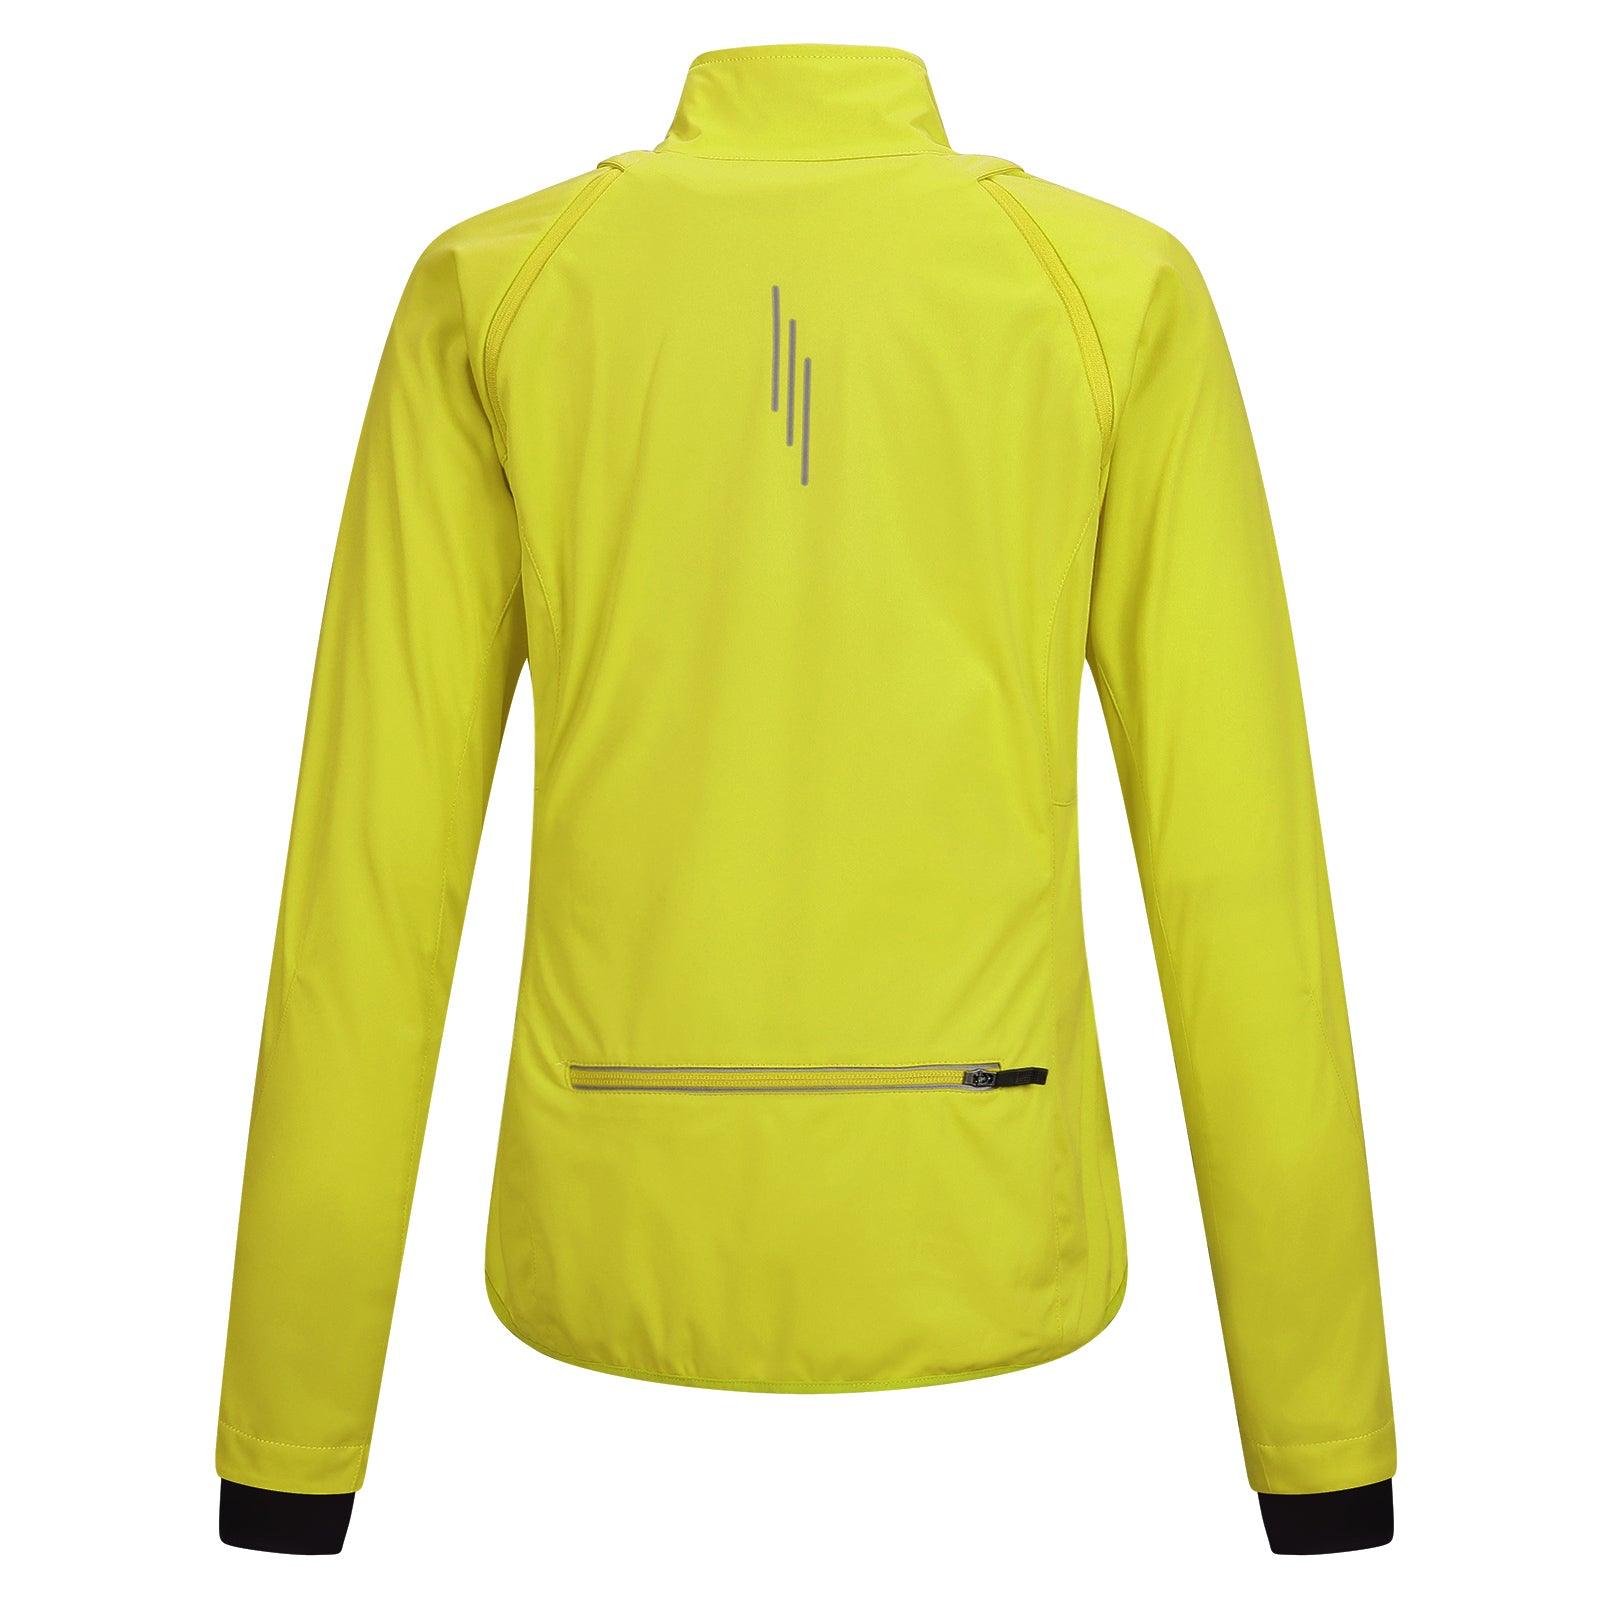 Men's Cycling Jacket Long Sleeve, Waterproof Running Bike Vest Outerwe –  33,000ft